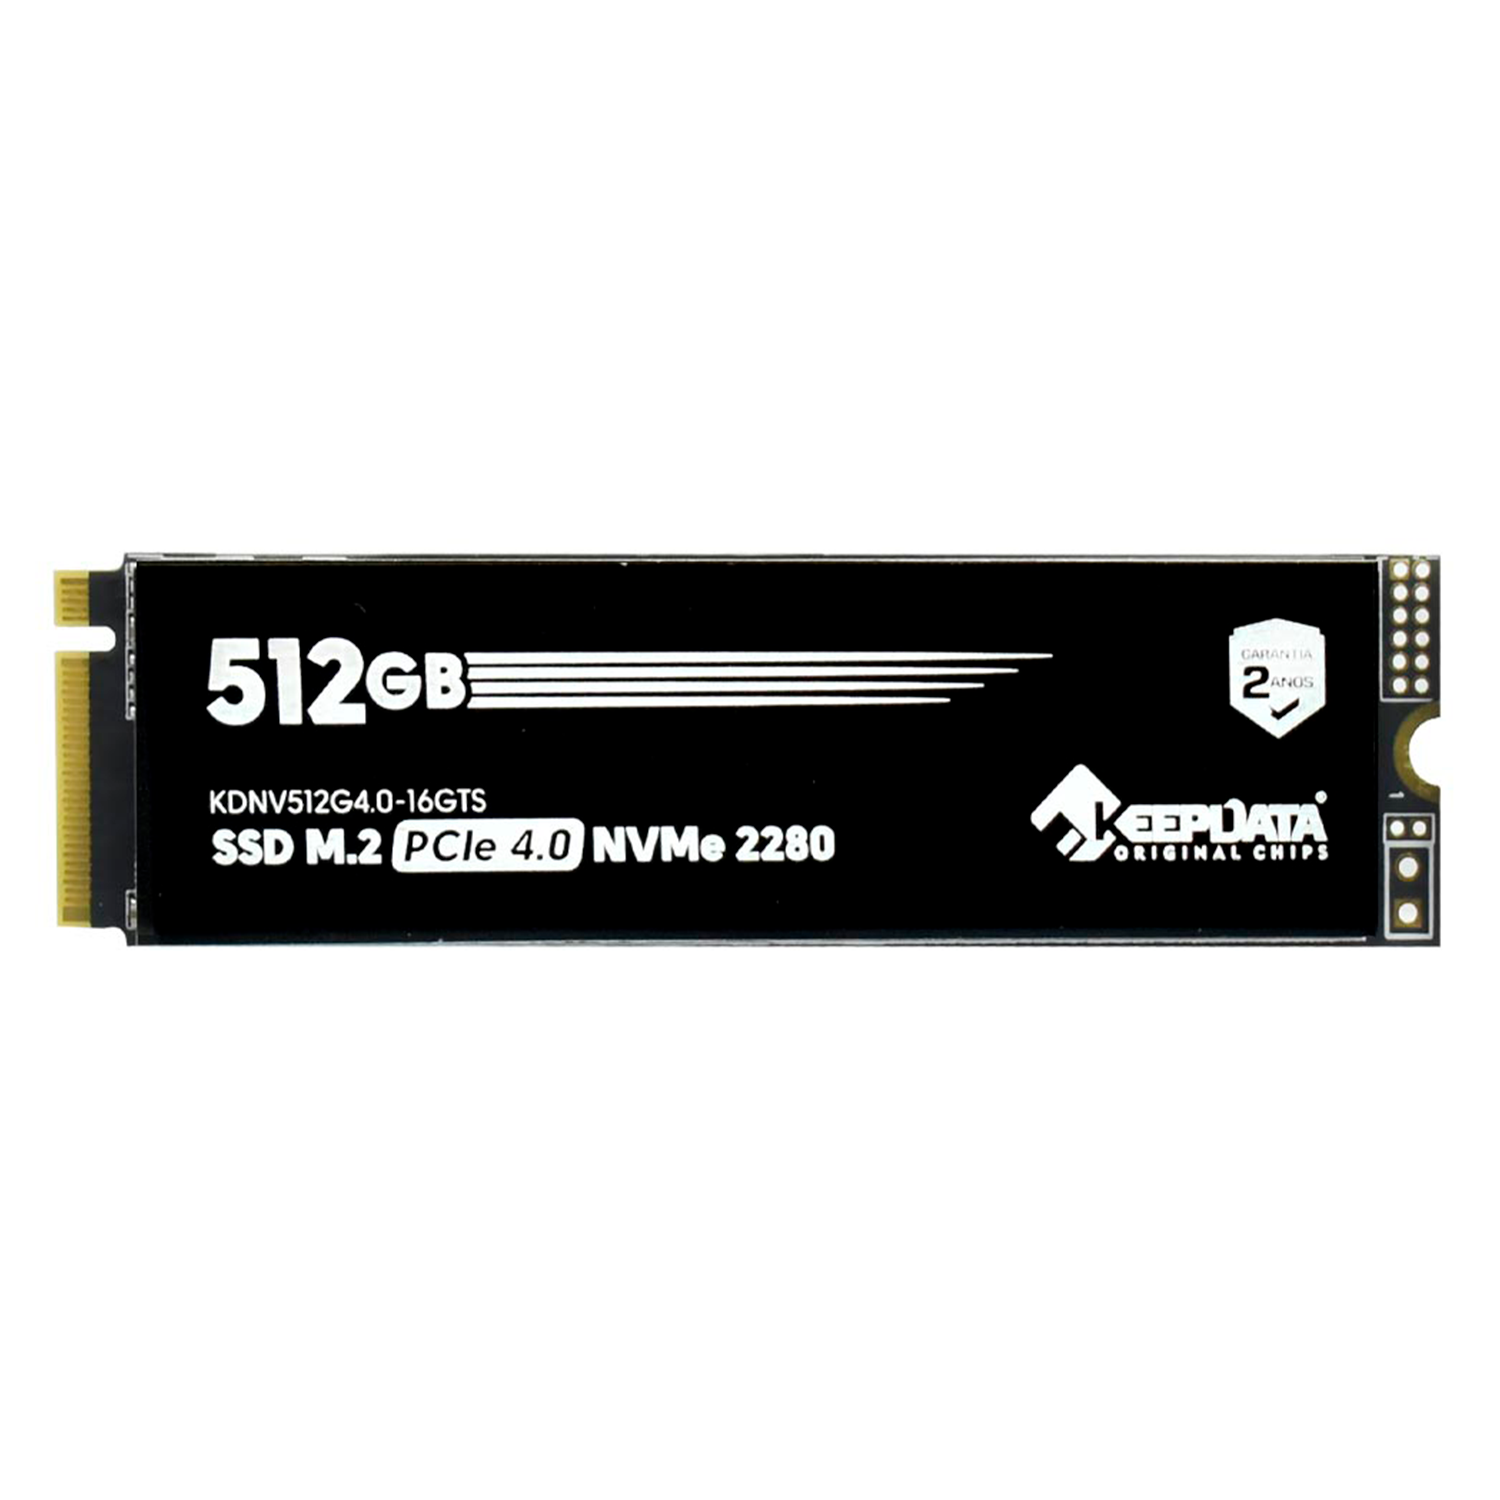 SSD M.2 Keepdata 512GB NVMe PCIe 4.0 - KDNV512G4.0-16GTS